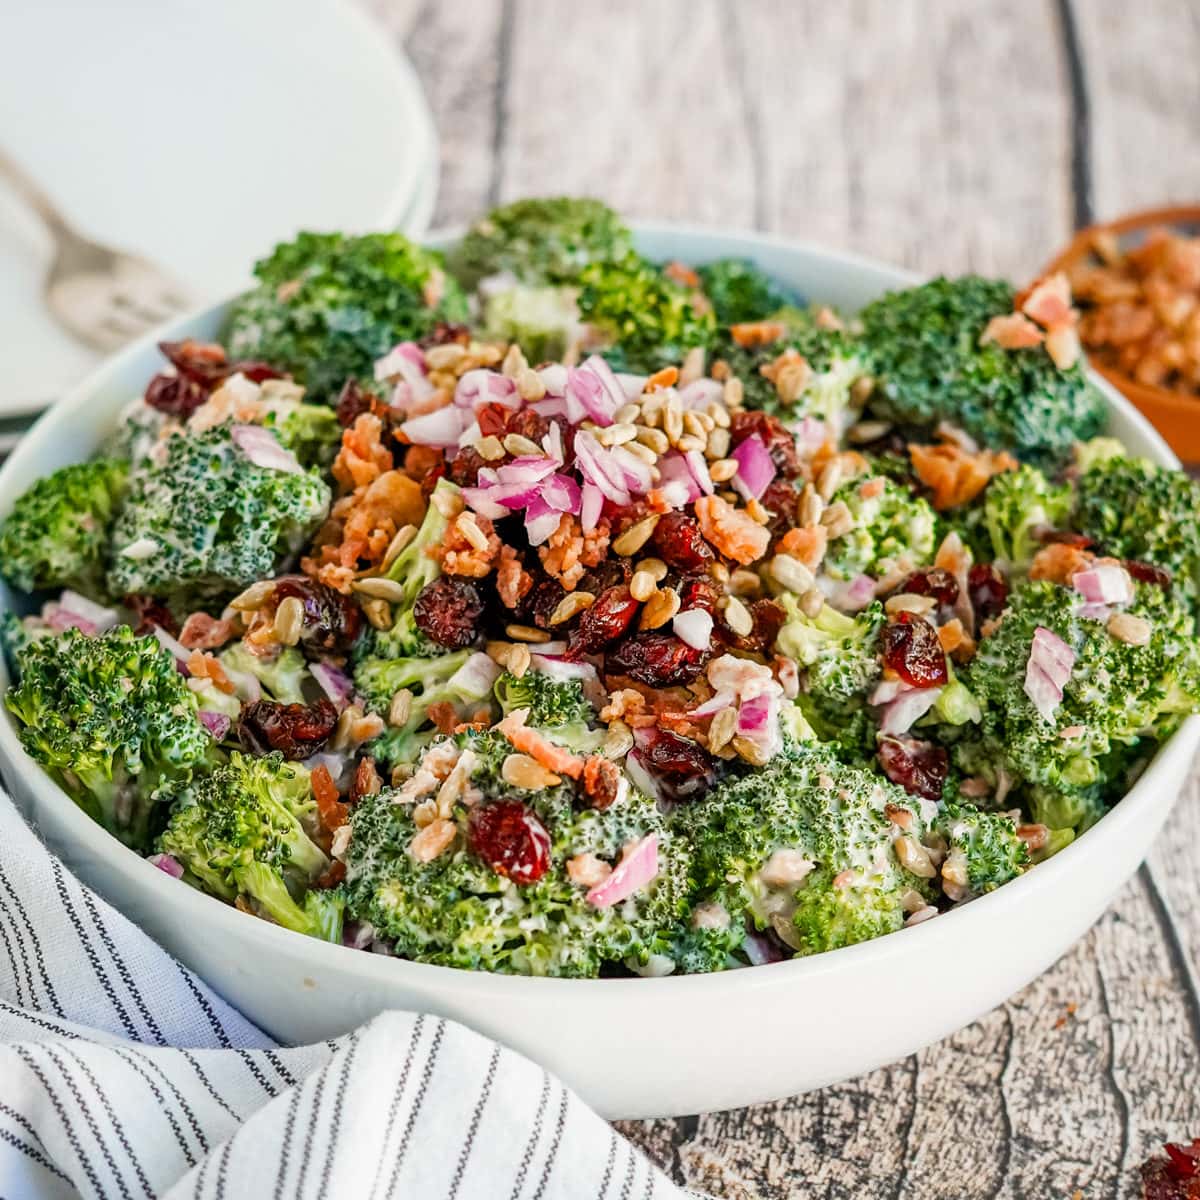 A close shot of a fork full of broccoli salad.